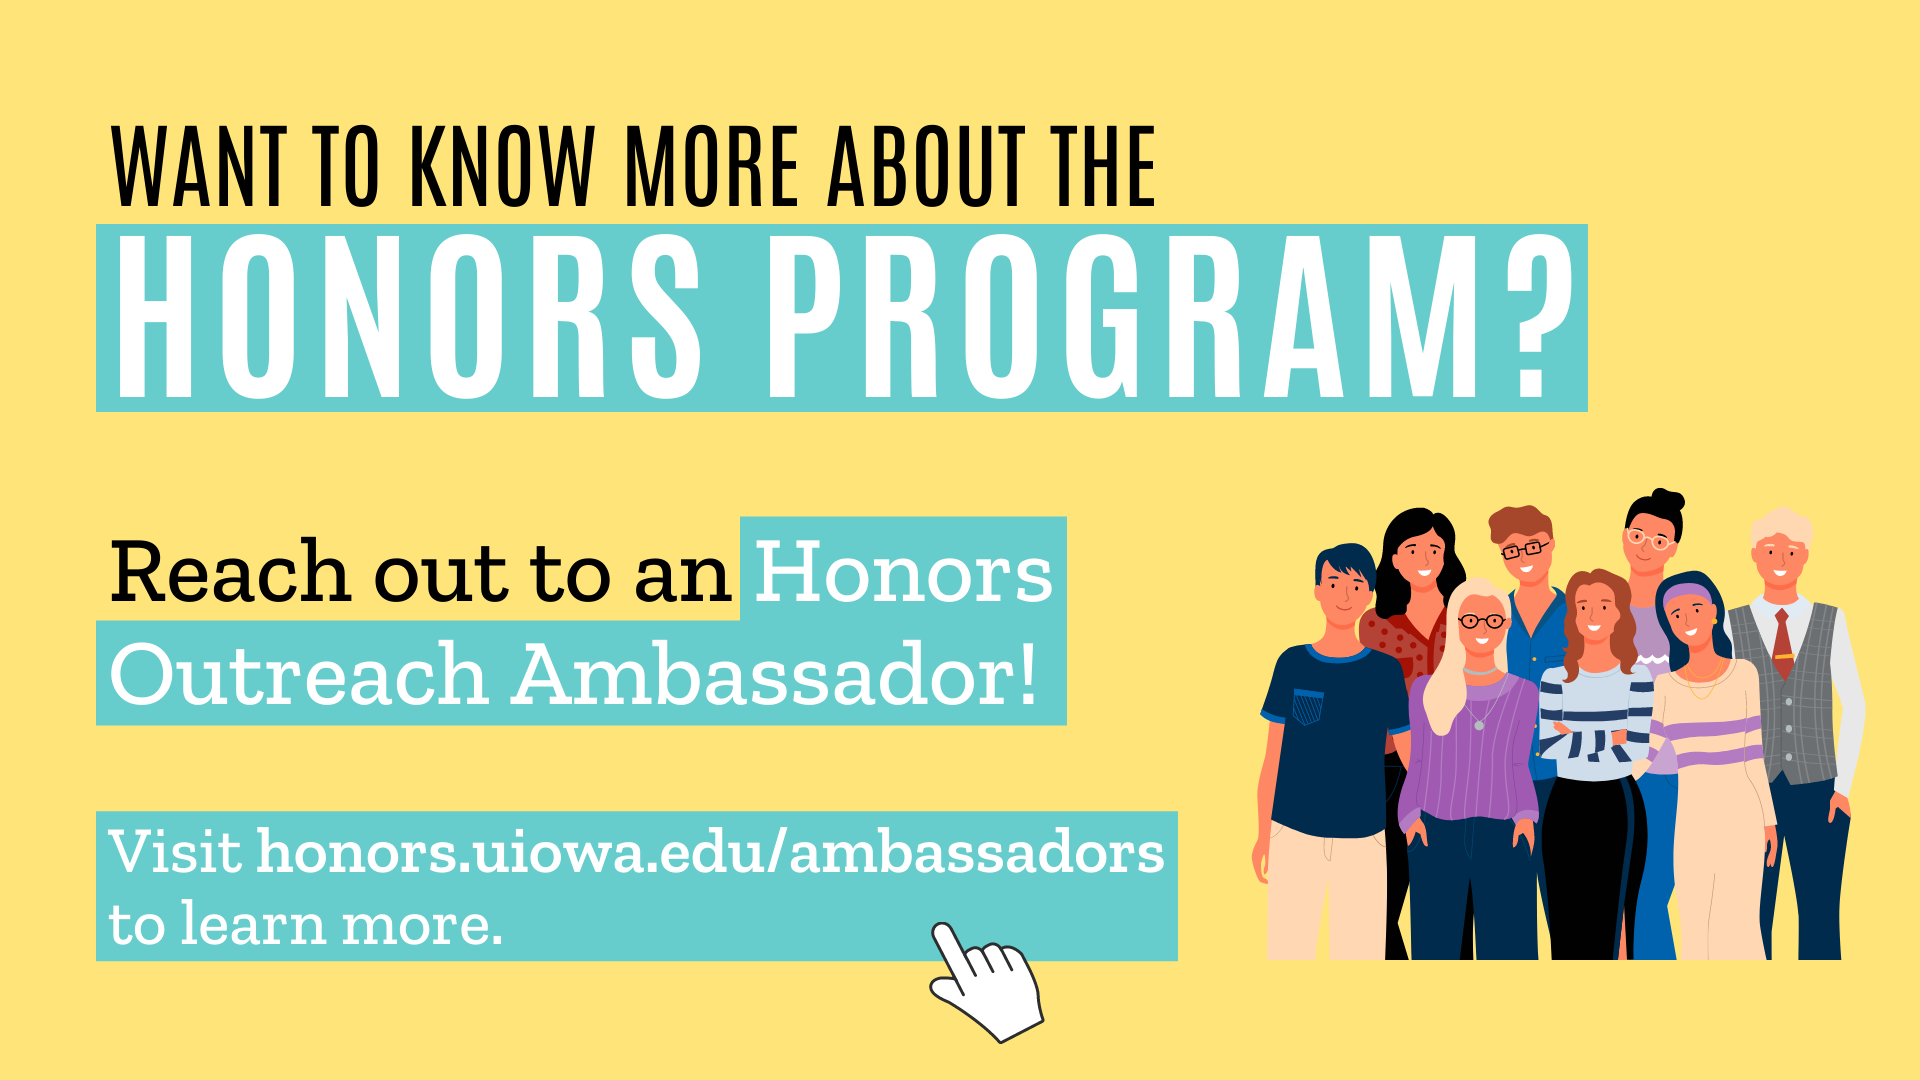 Meet the Honors Outreach Ambassadors